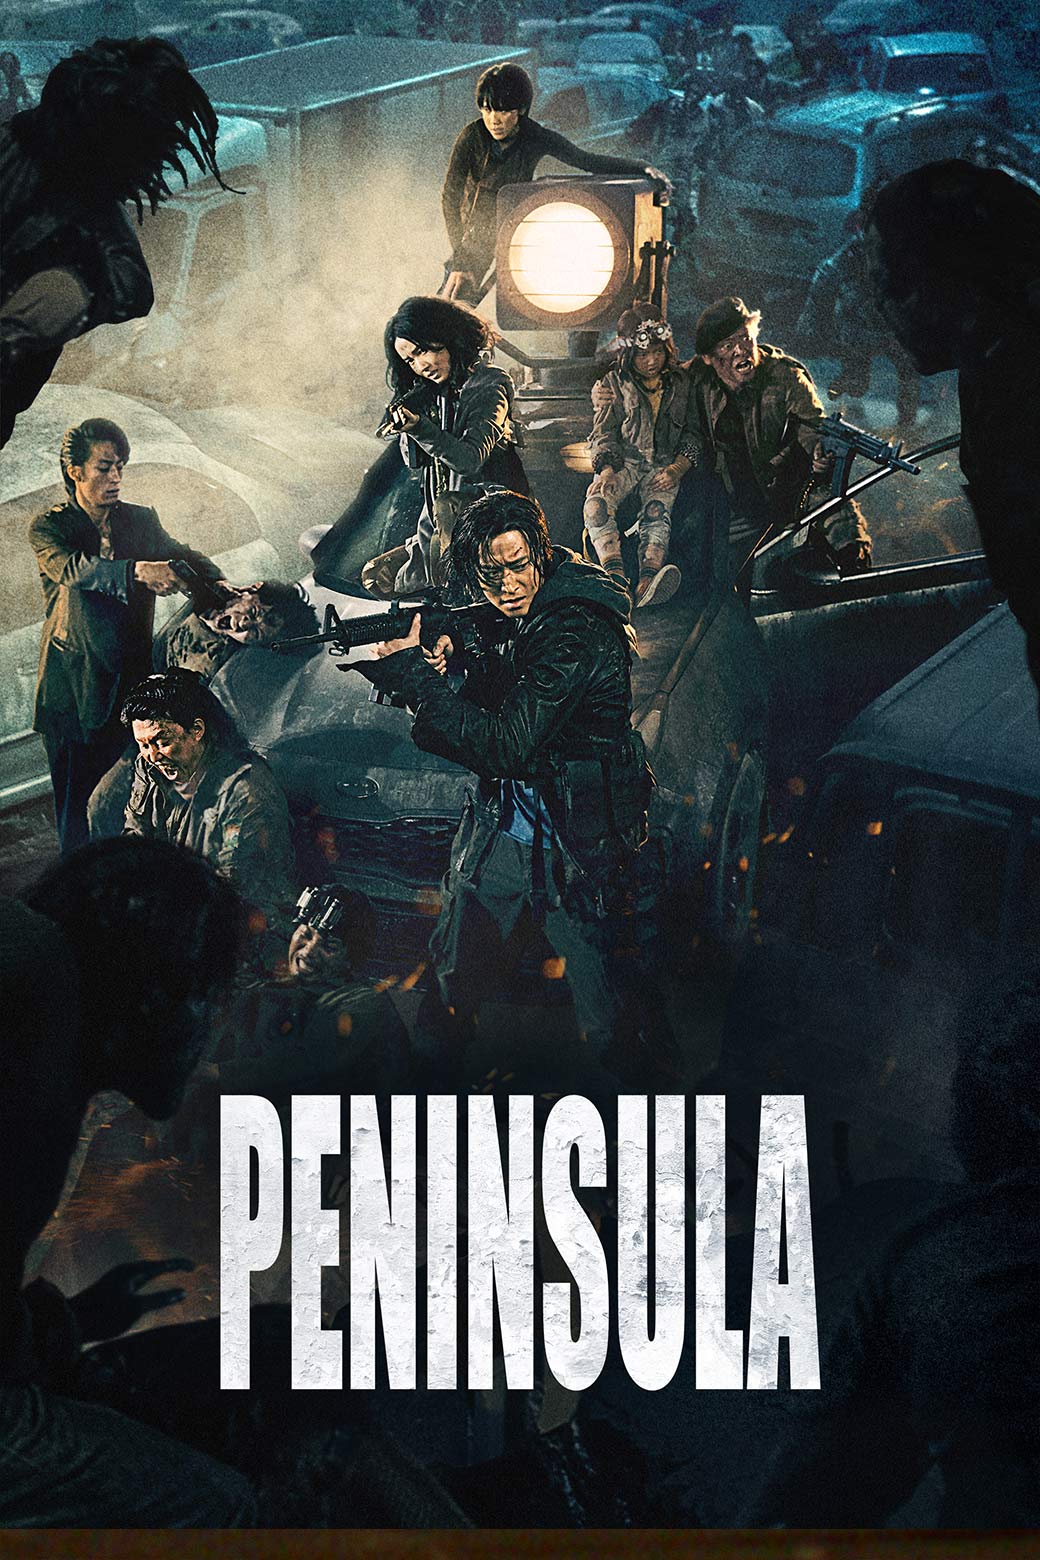 Train to Busan Presents: Peninsula